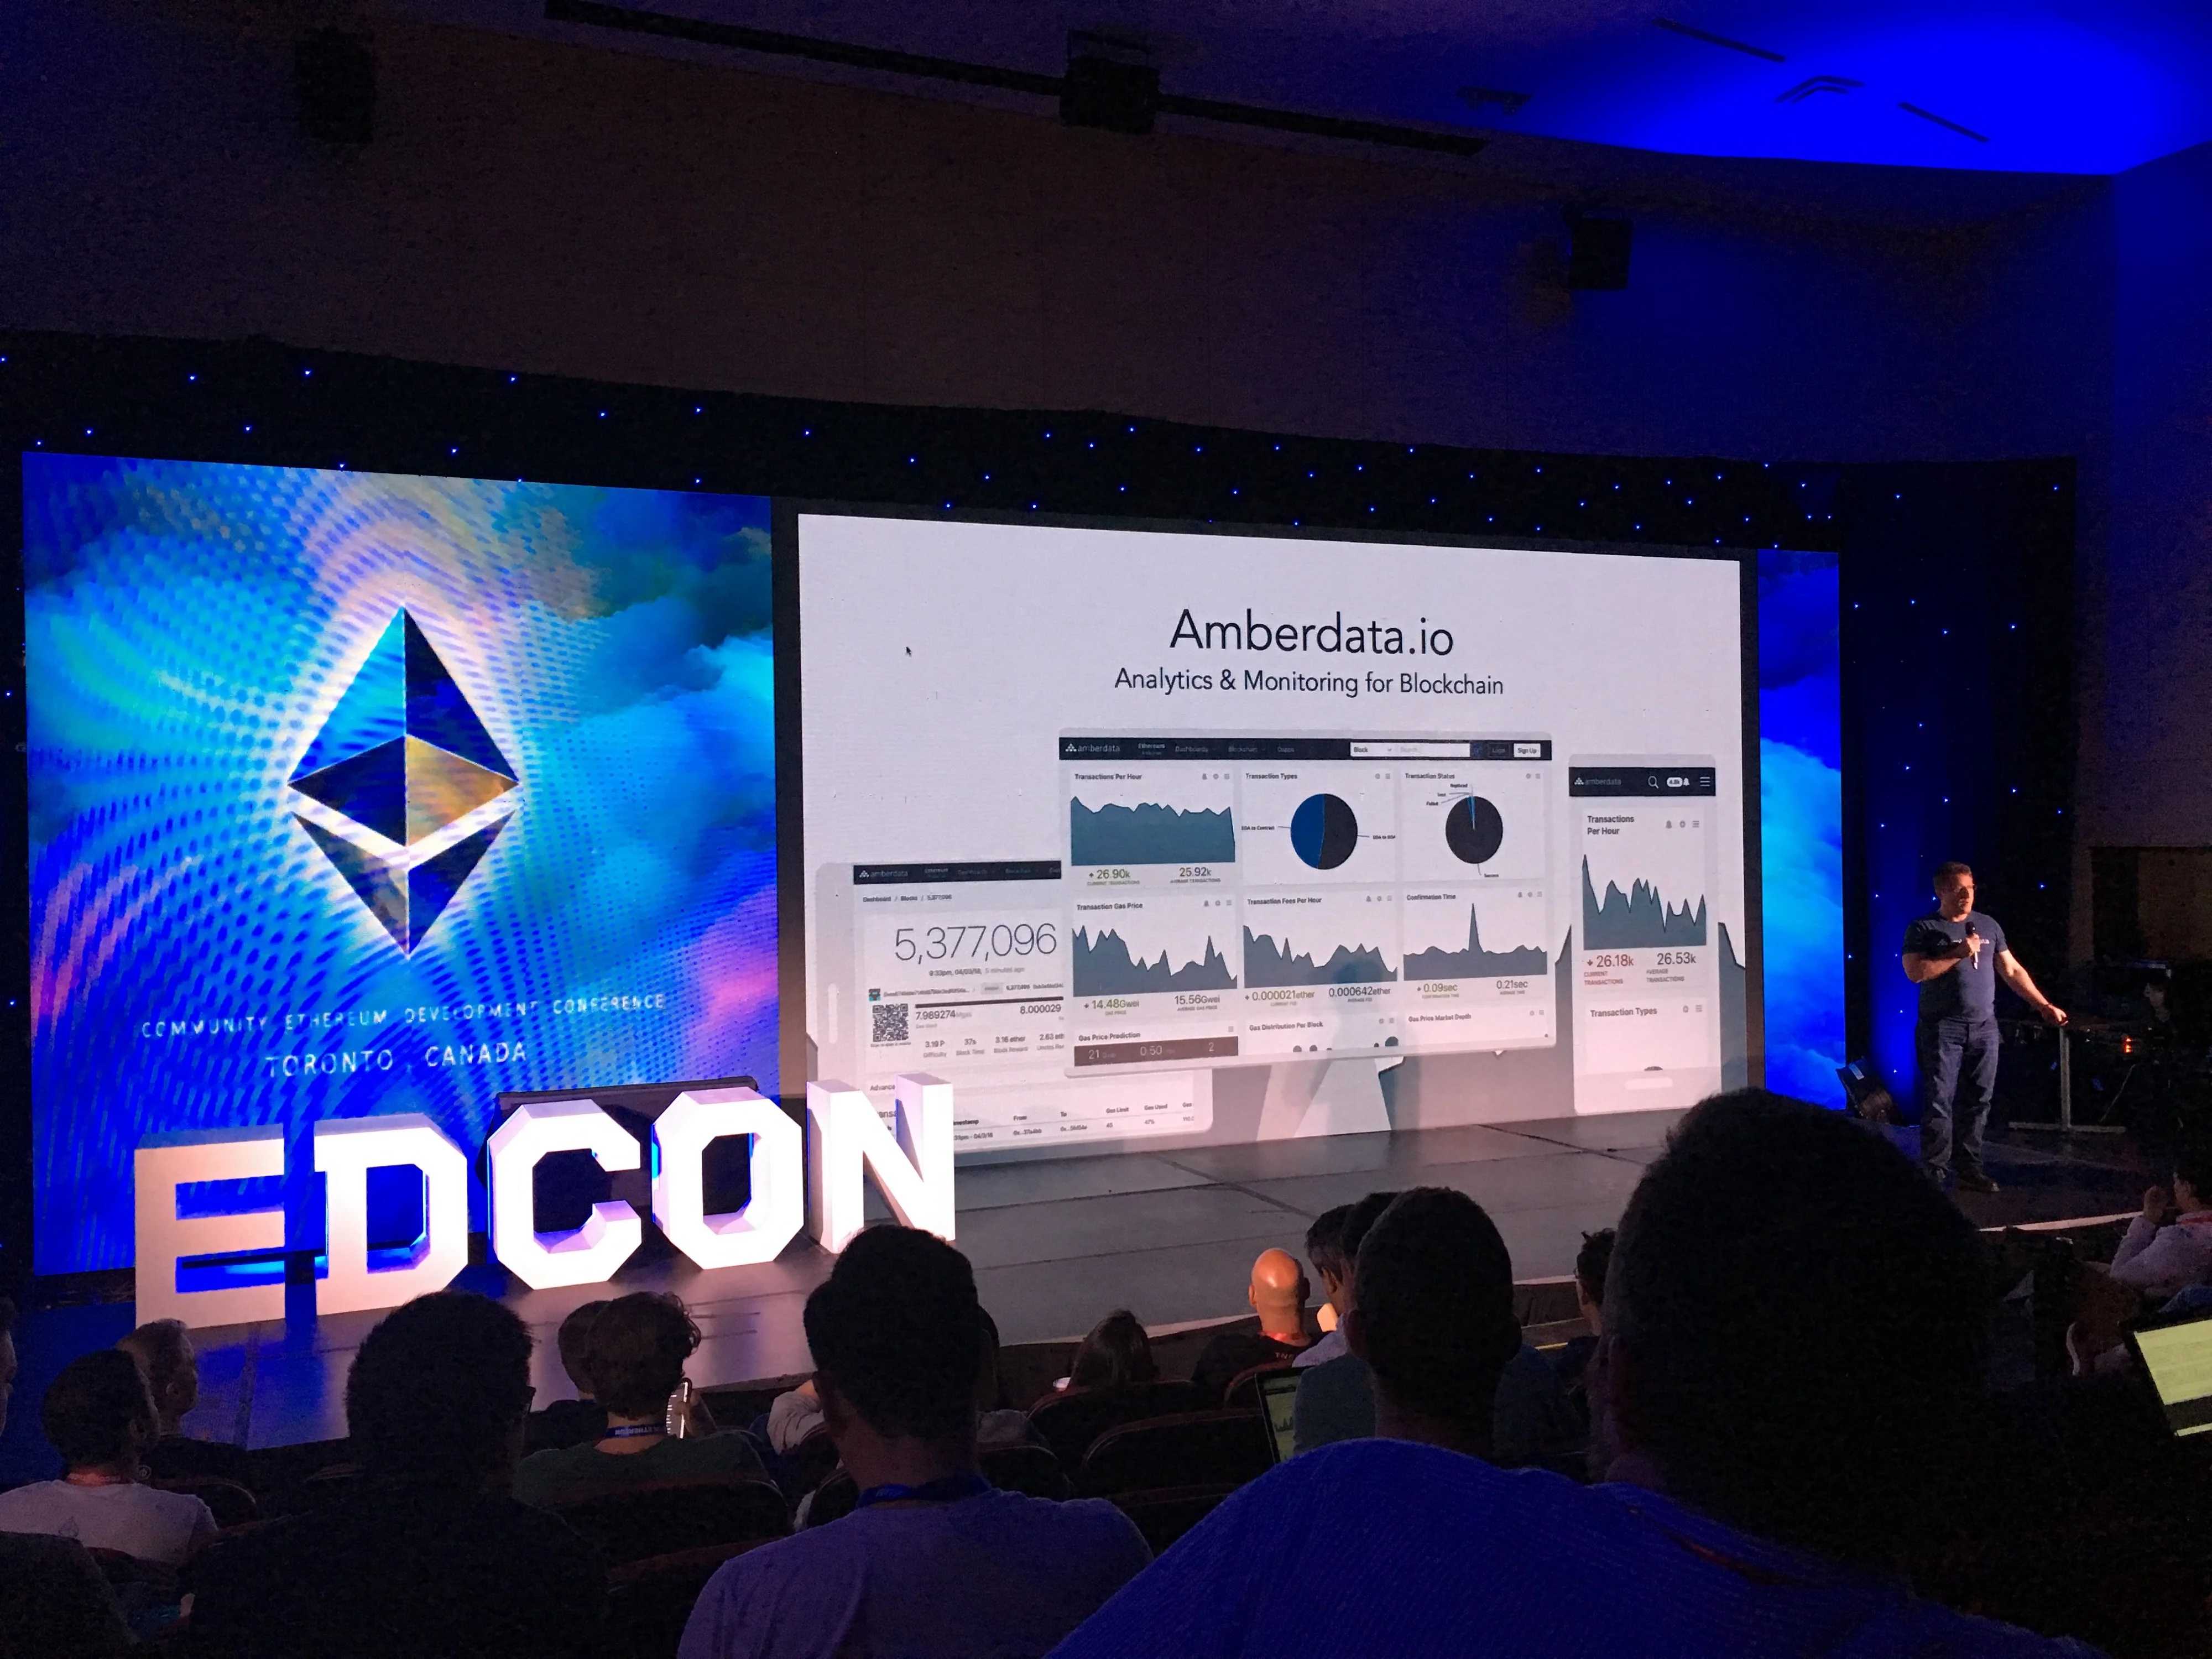 EDCON Toronto, Shawn Douglass Launching Amberdata.io